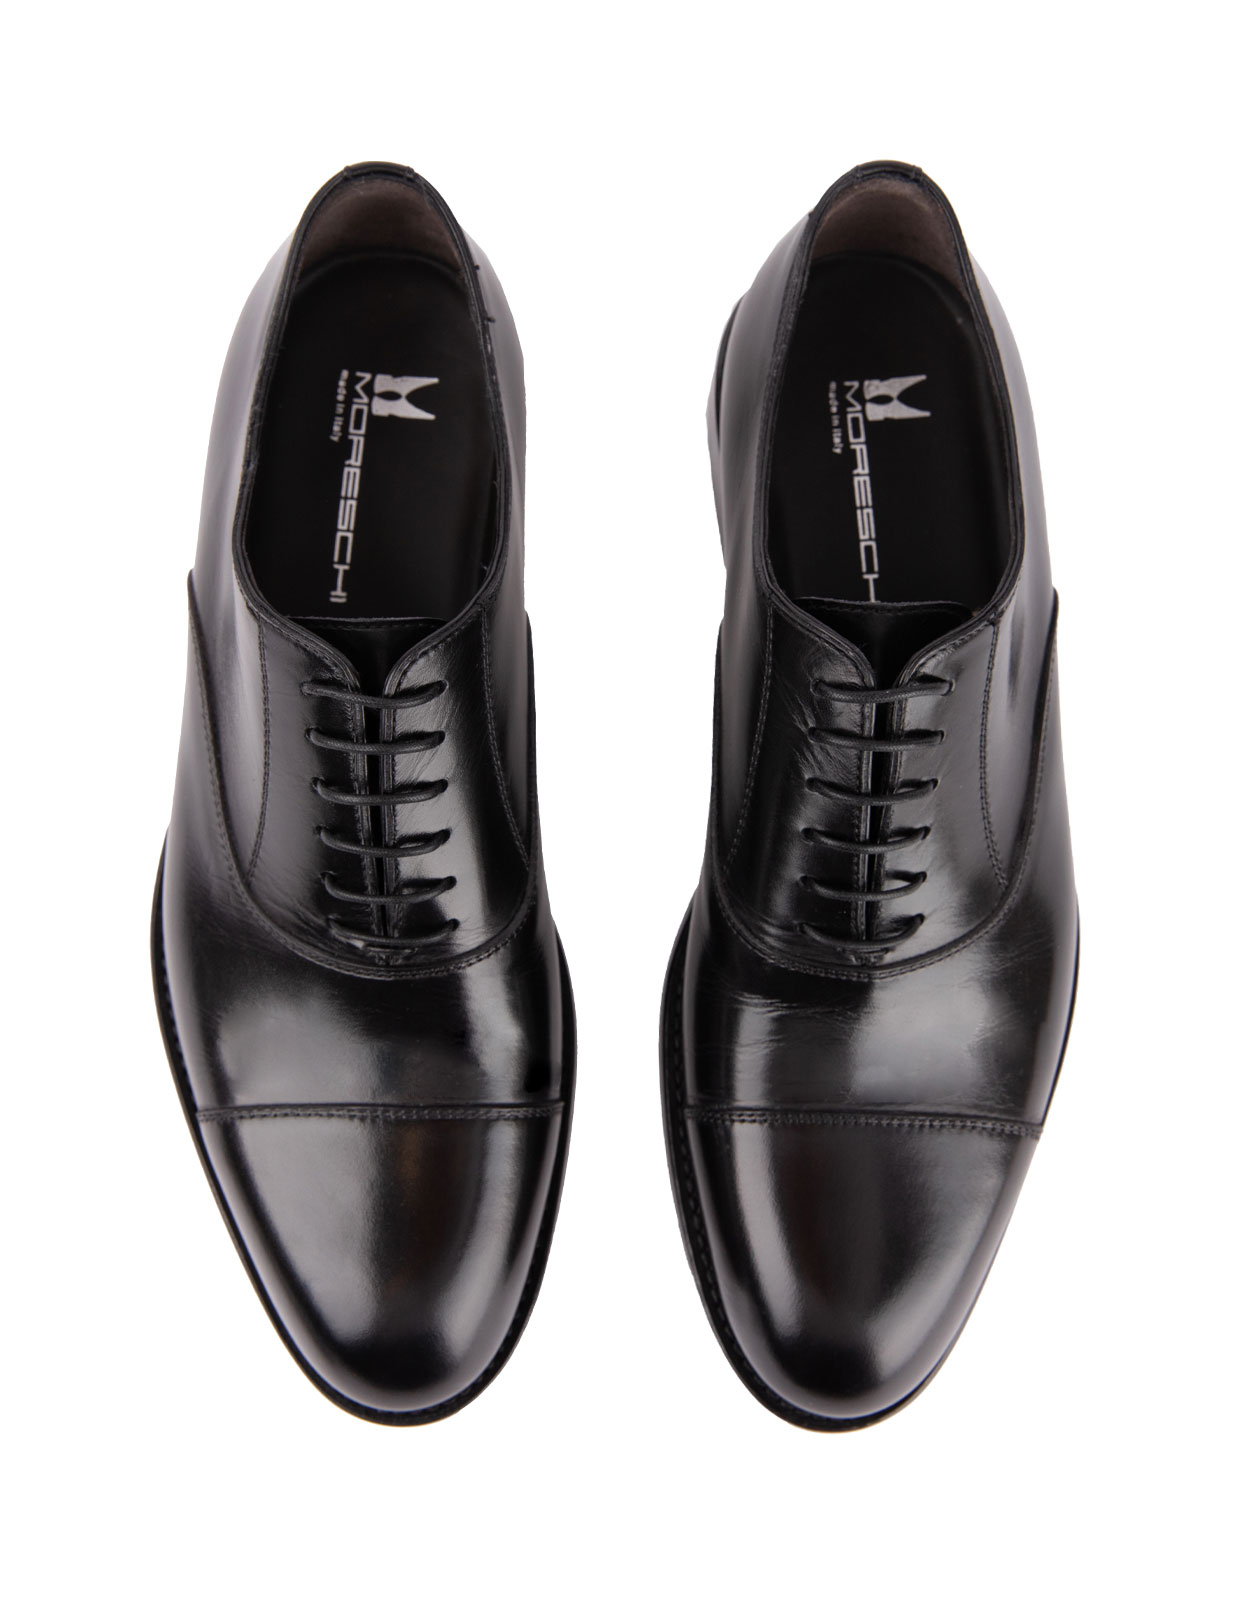 New York Oxford Shoes Calfskin Black Stl 10